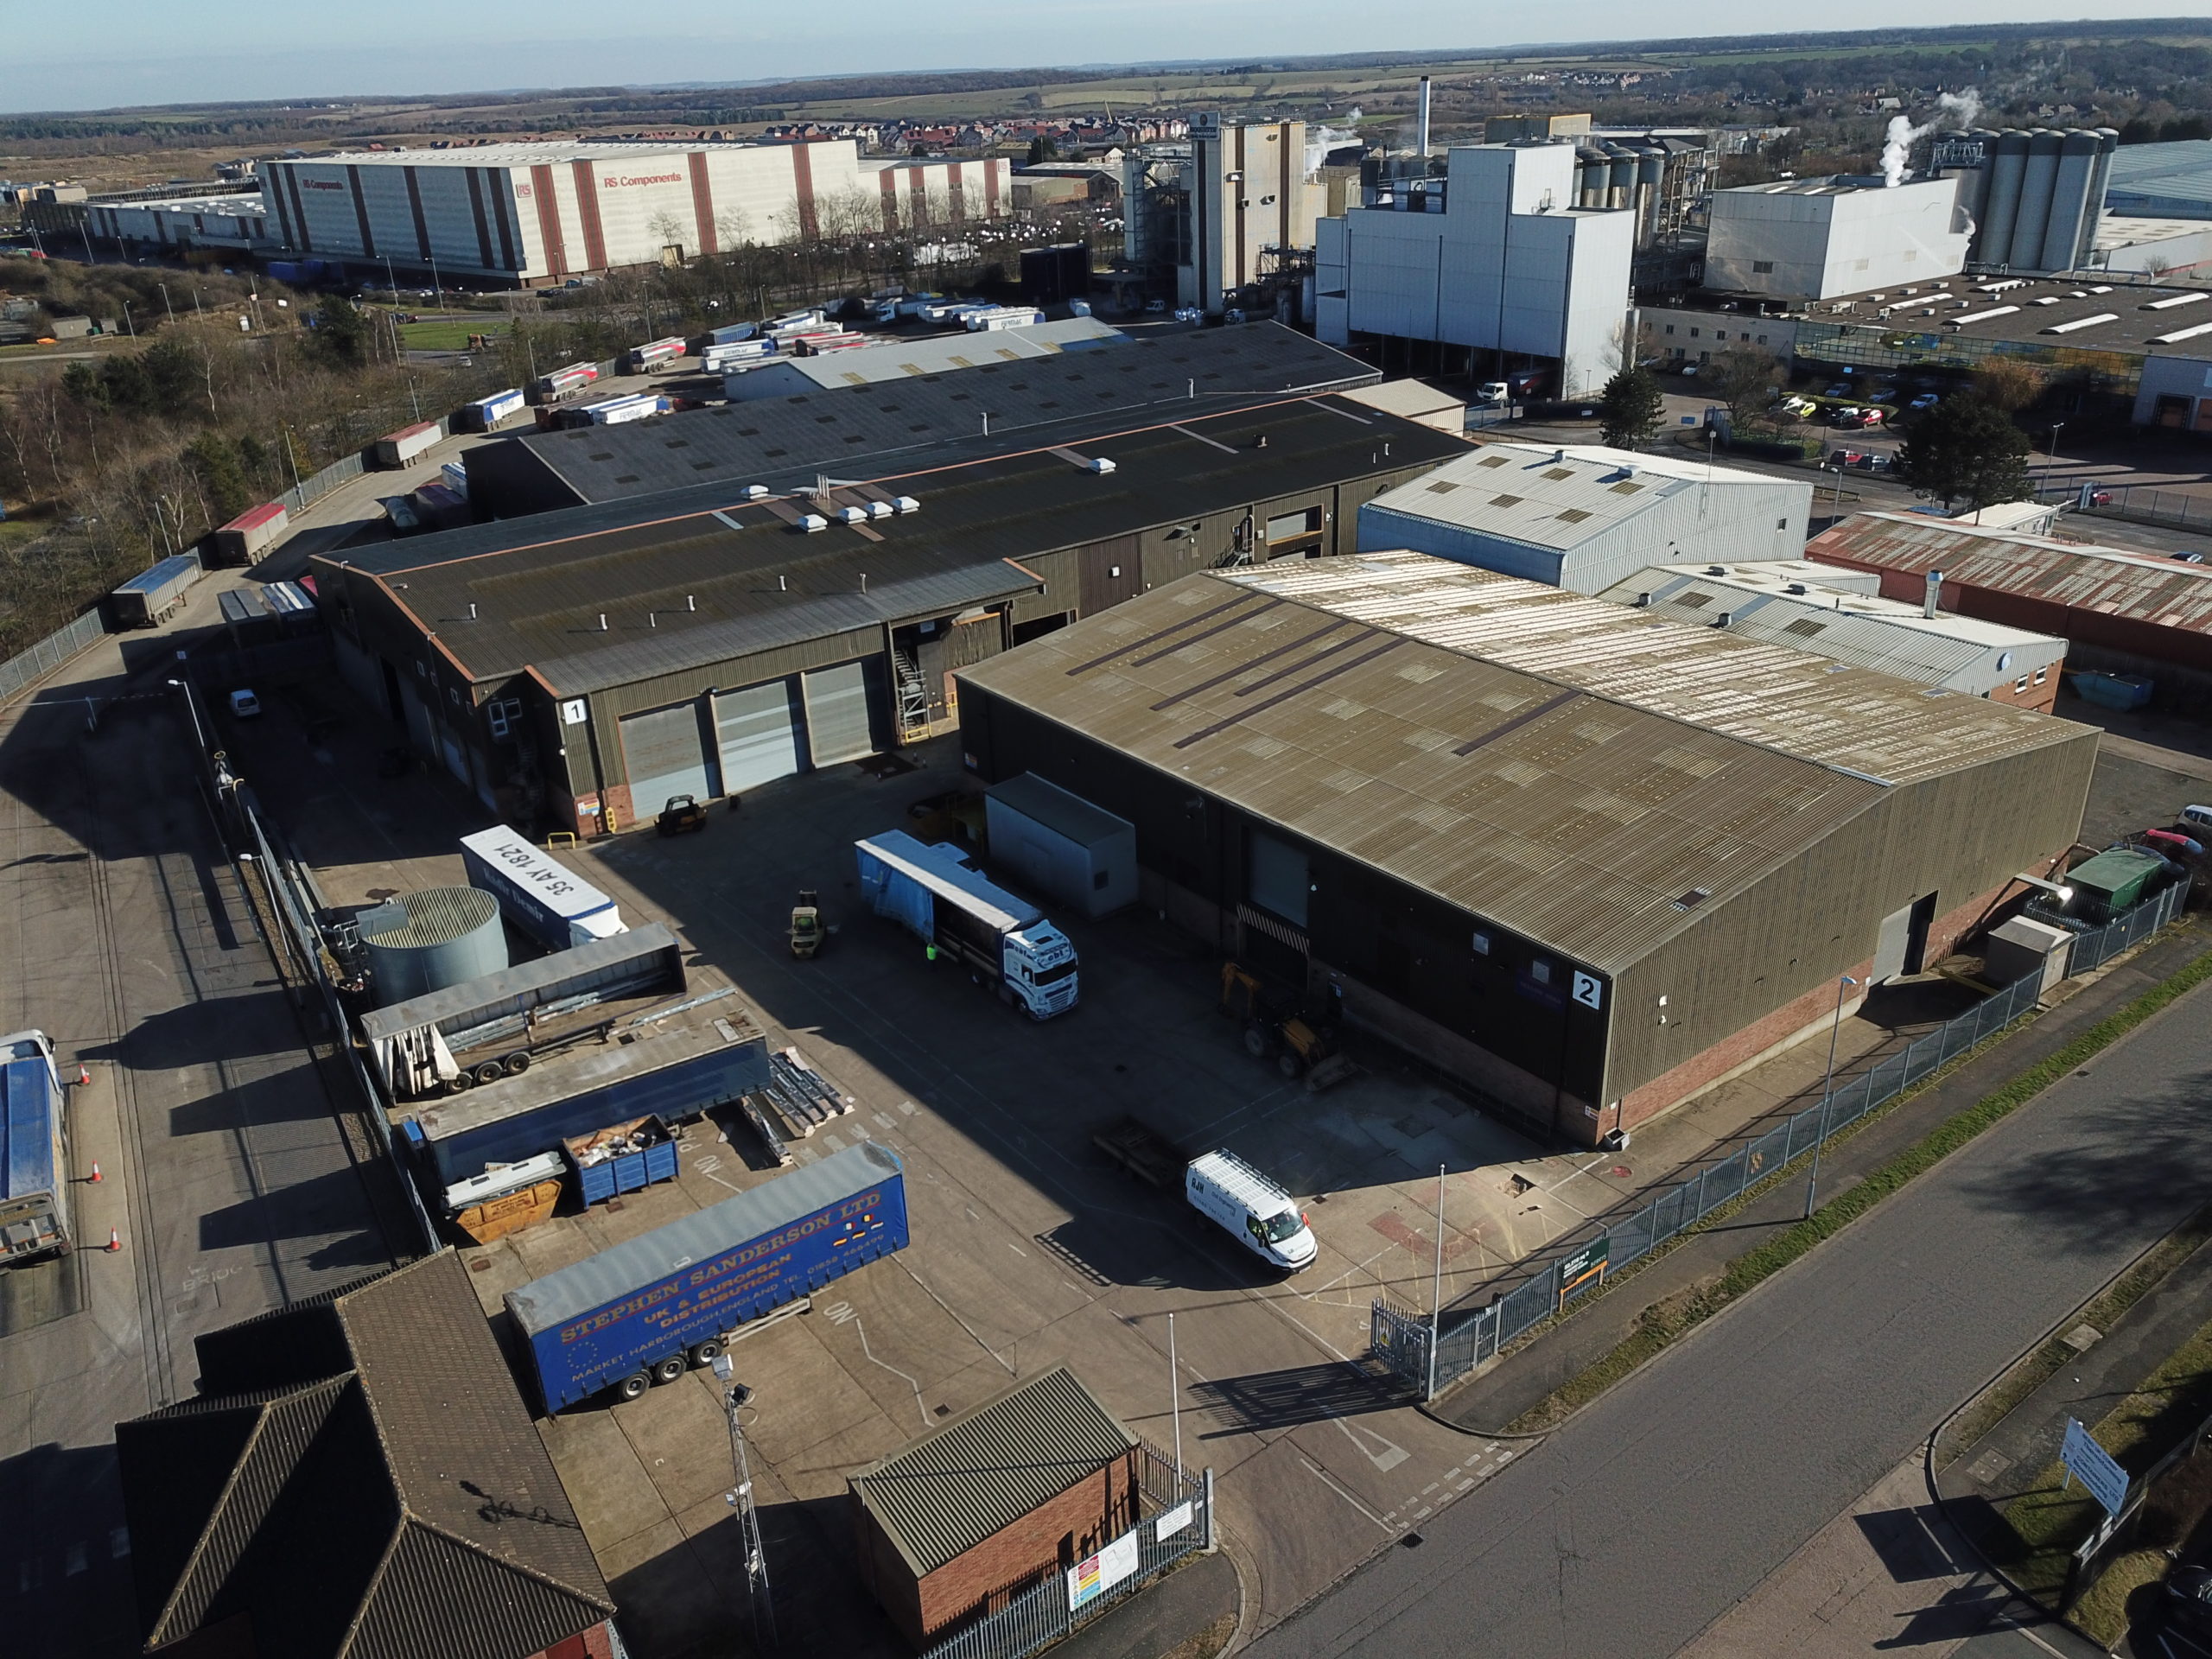 Stephen Sanderson Transport Ltd Purchase another High Bay Warehouse